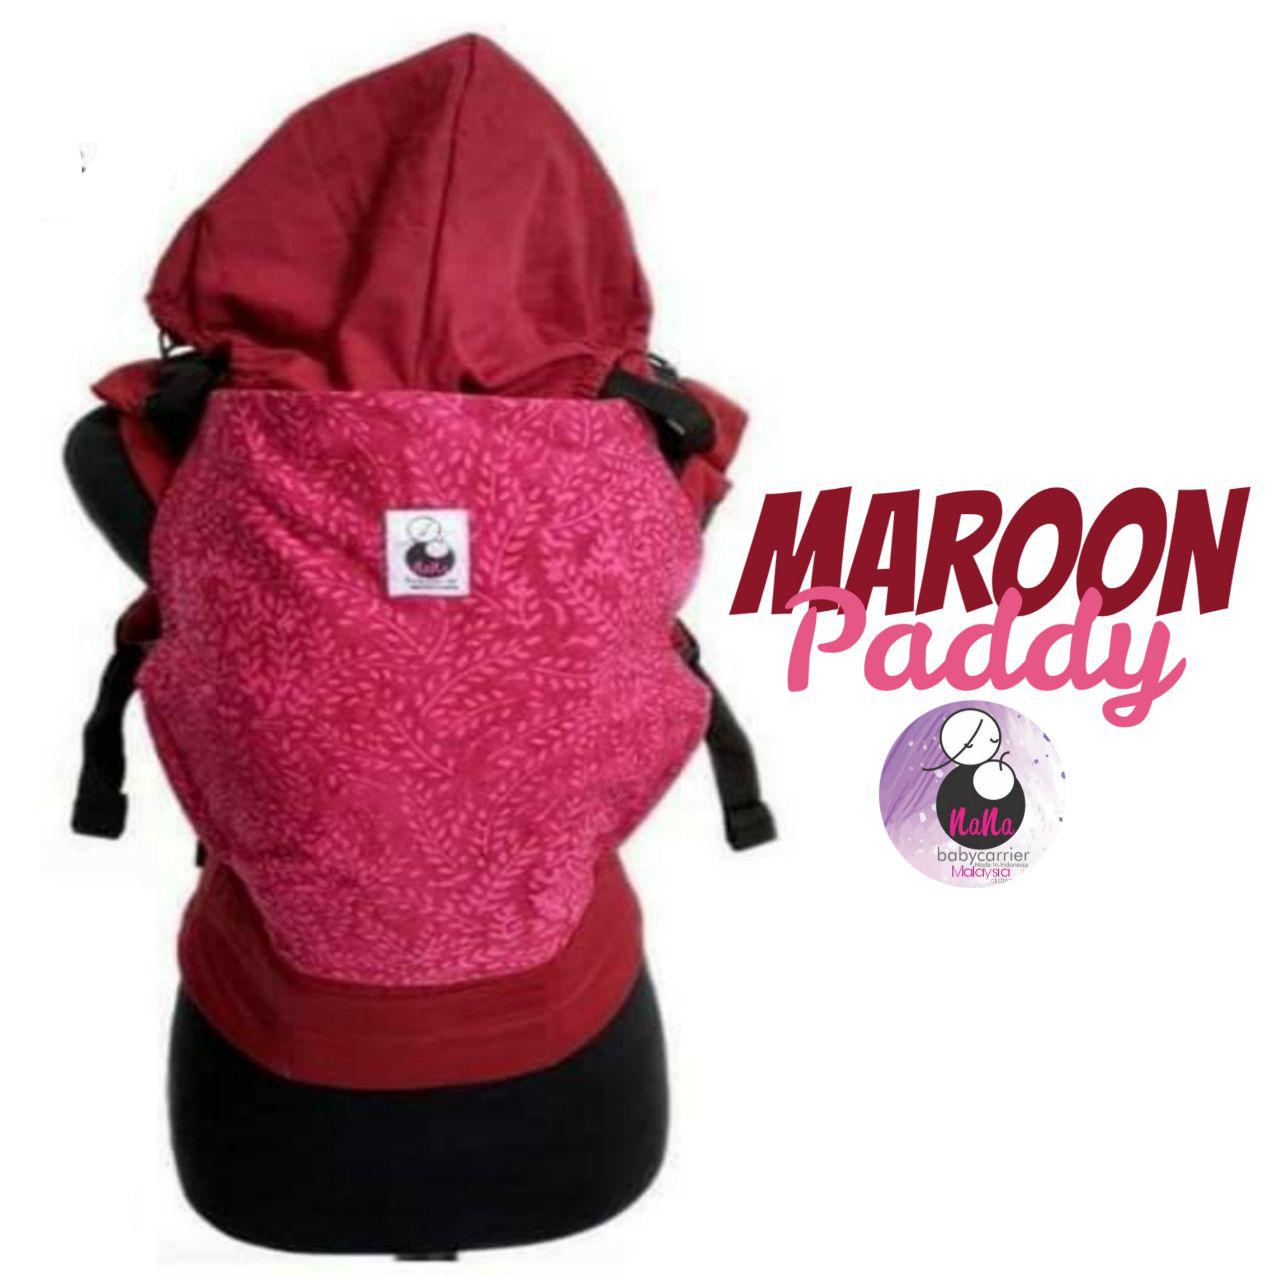 Nana Ssc Ergonomics Baby Carrier Standard Size Maroon Paddy